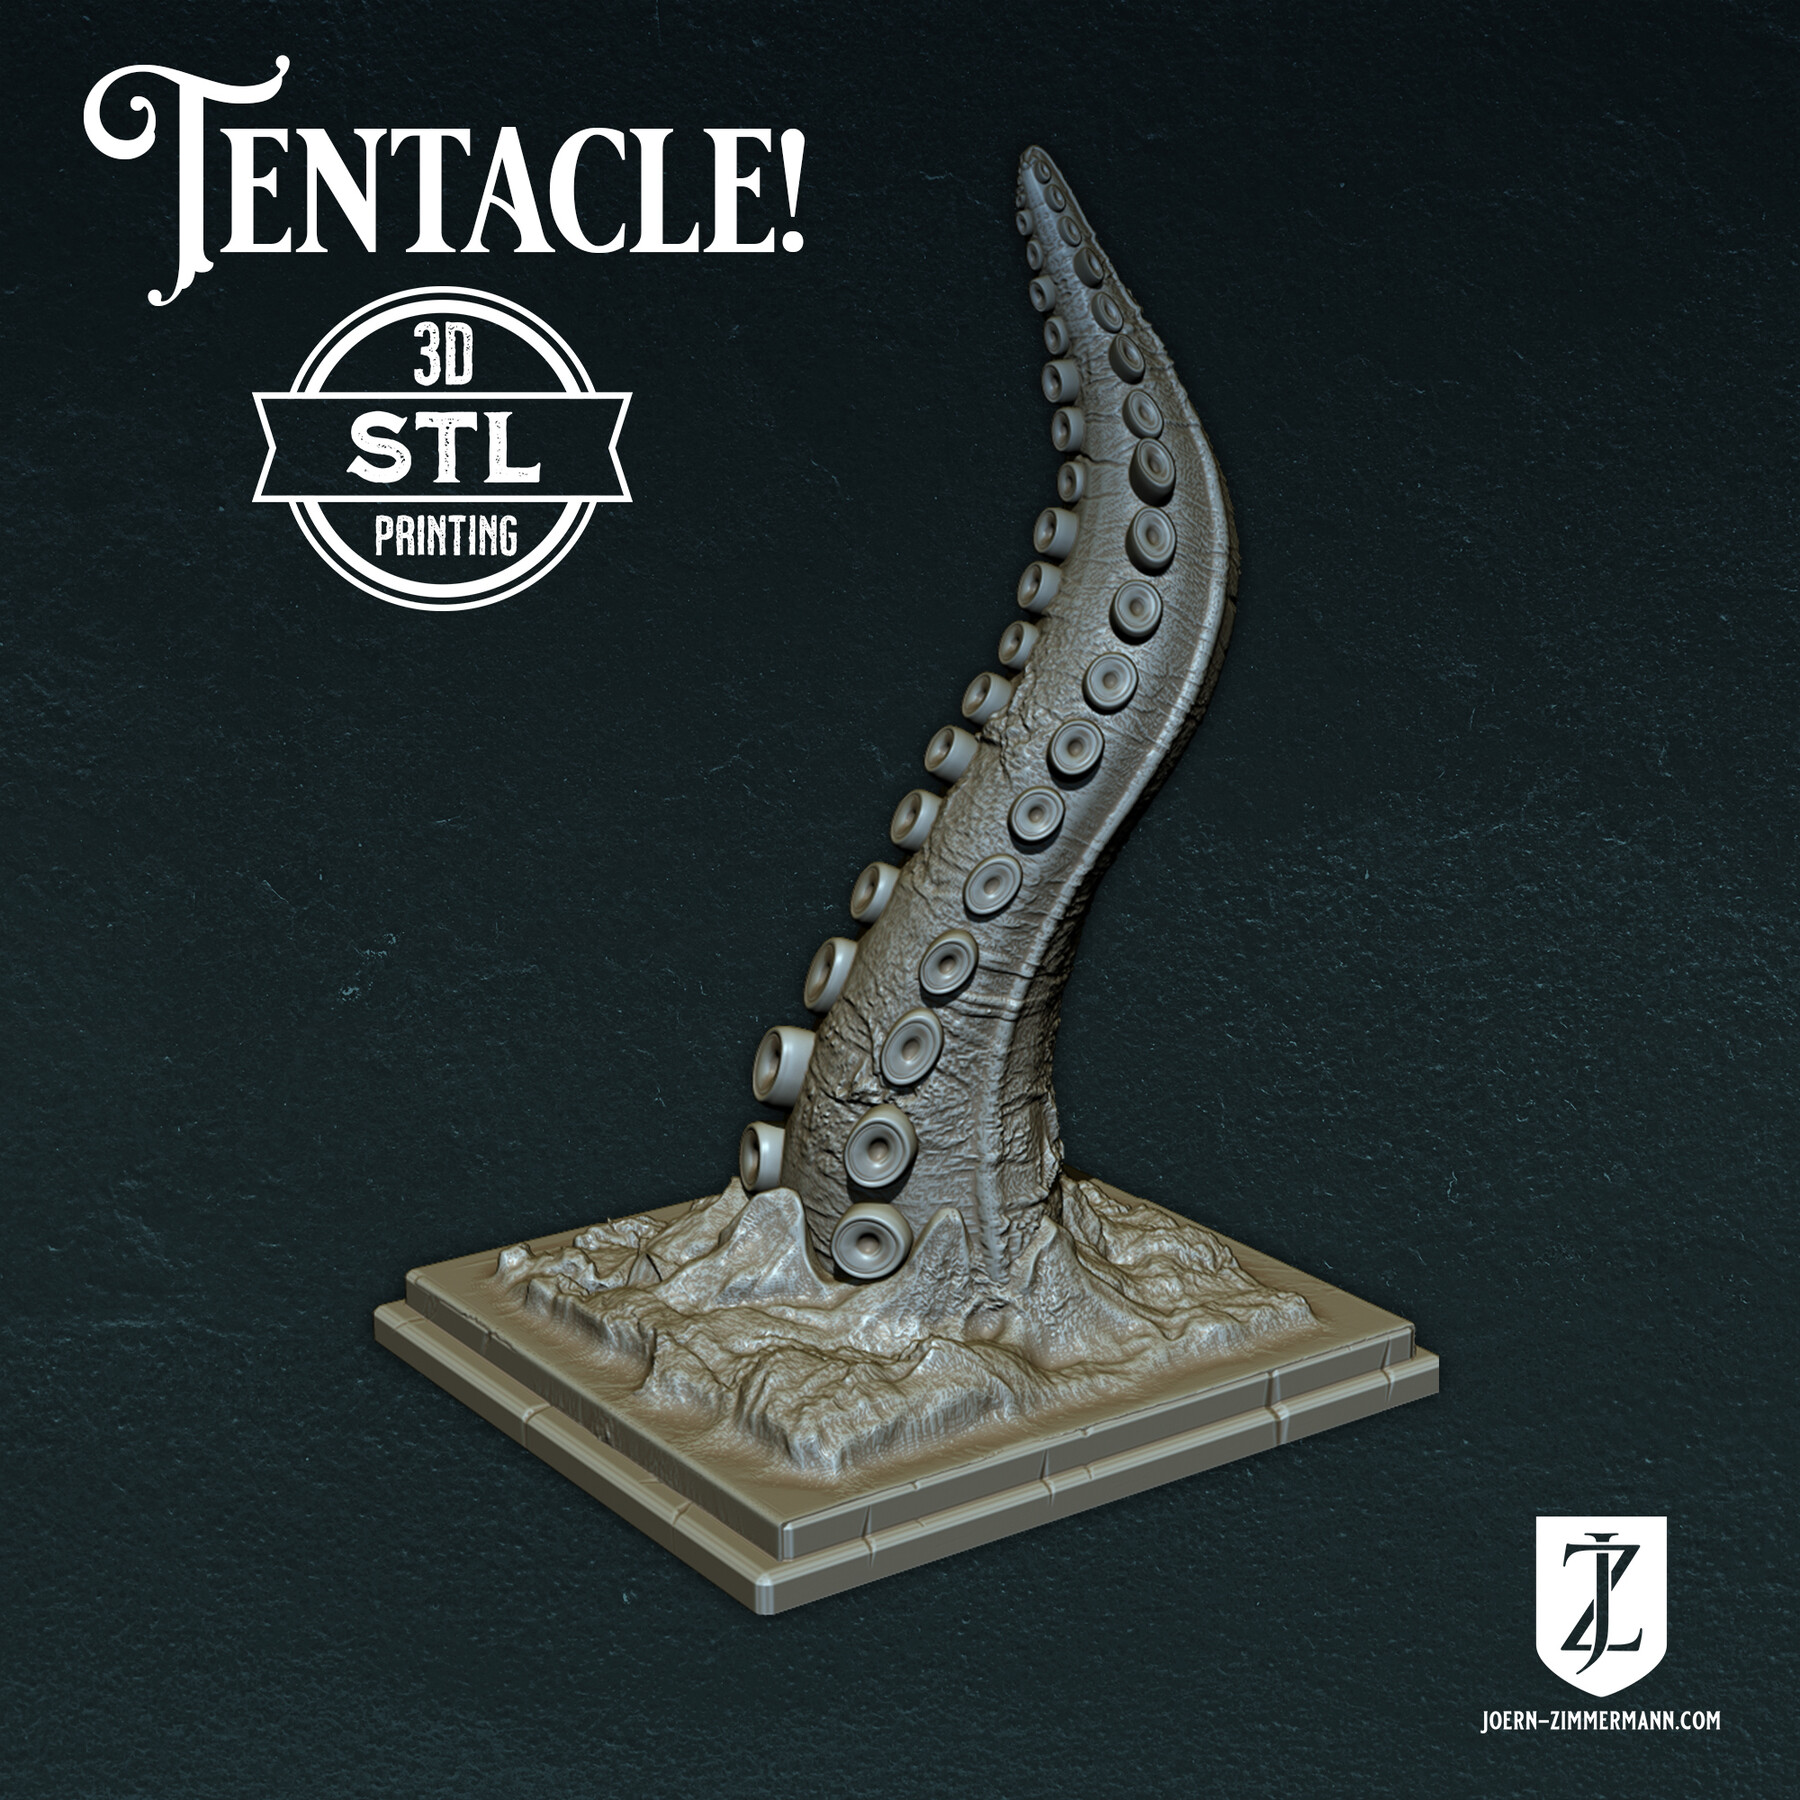 ArtStation - TENTACLE! STL for 3D Printing